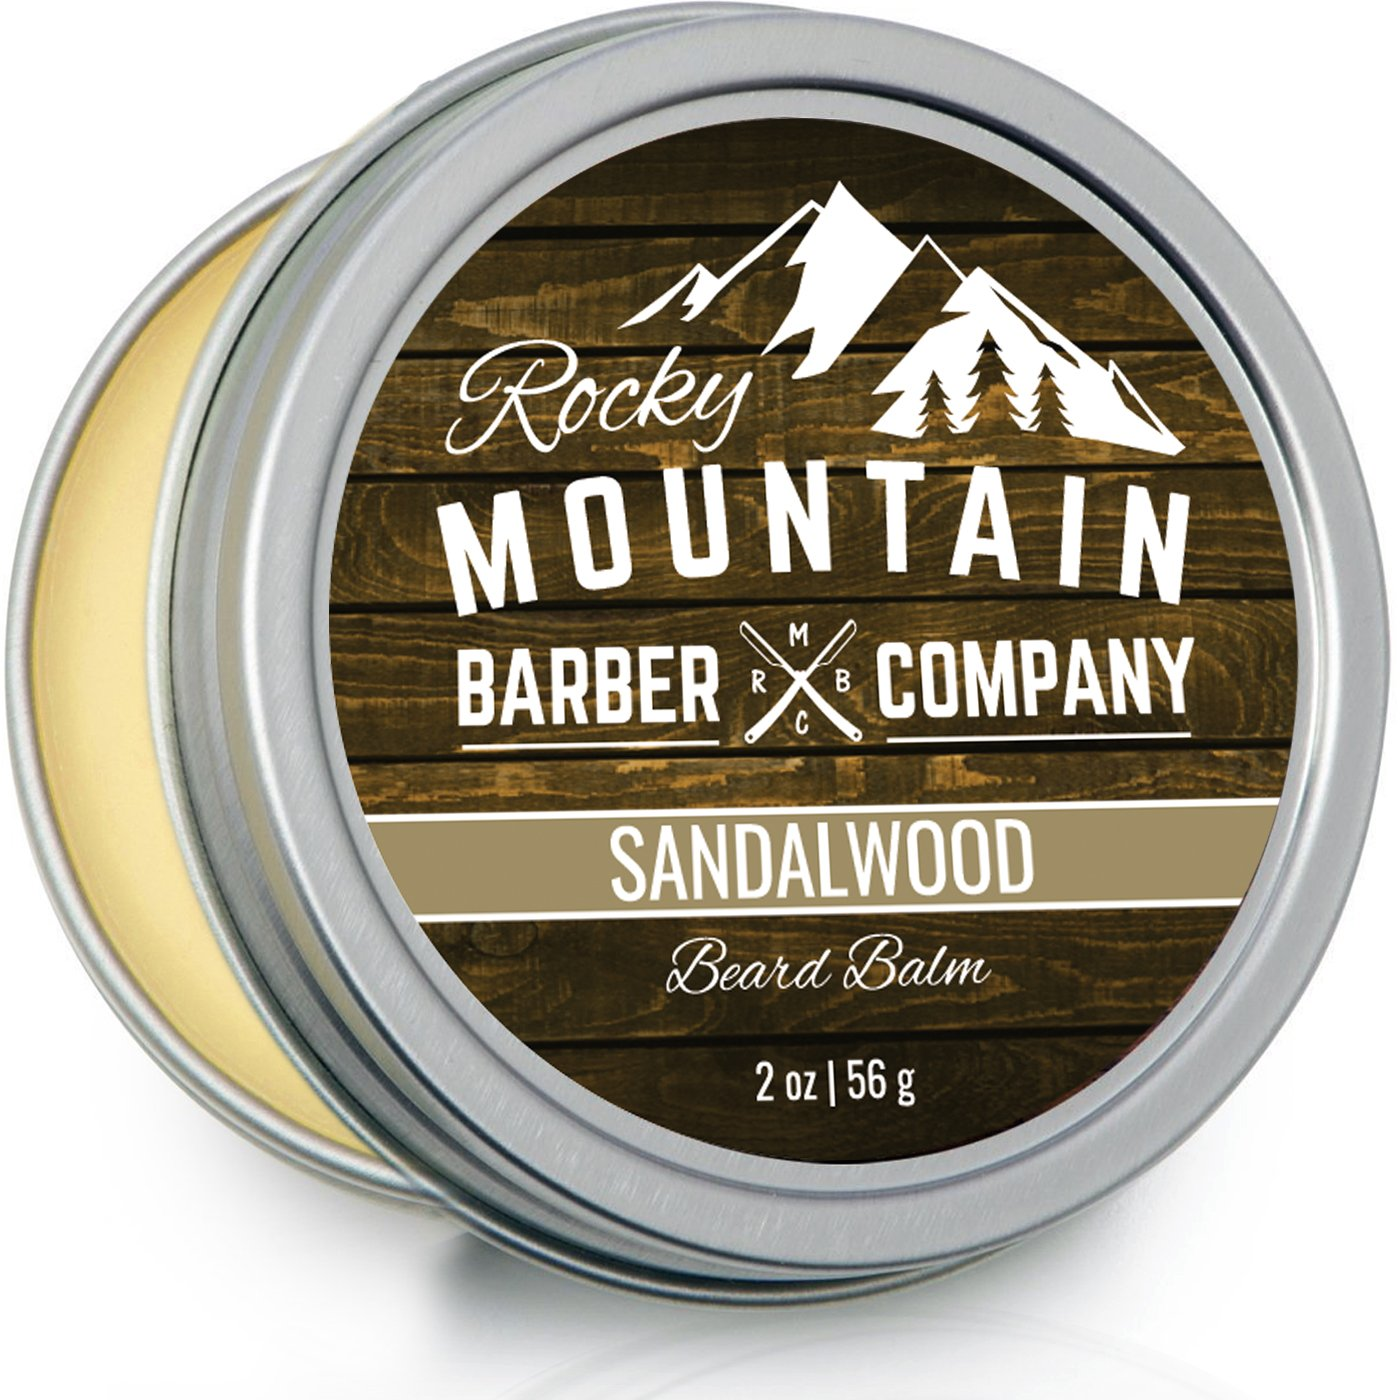 Rocky Mountain Barber Company's Sandalwood Beard Balm